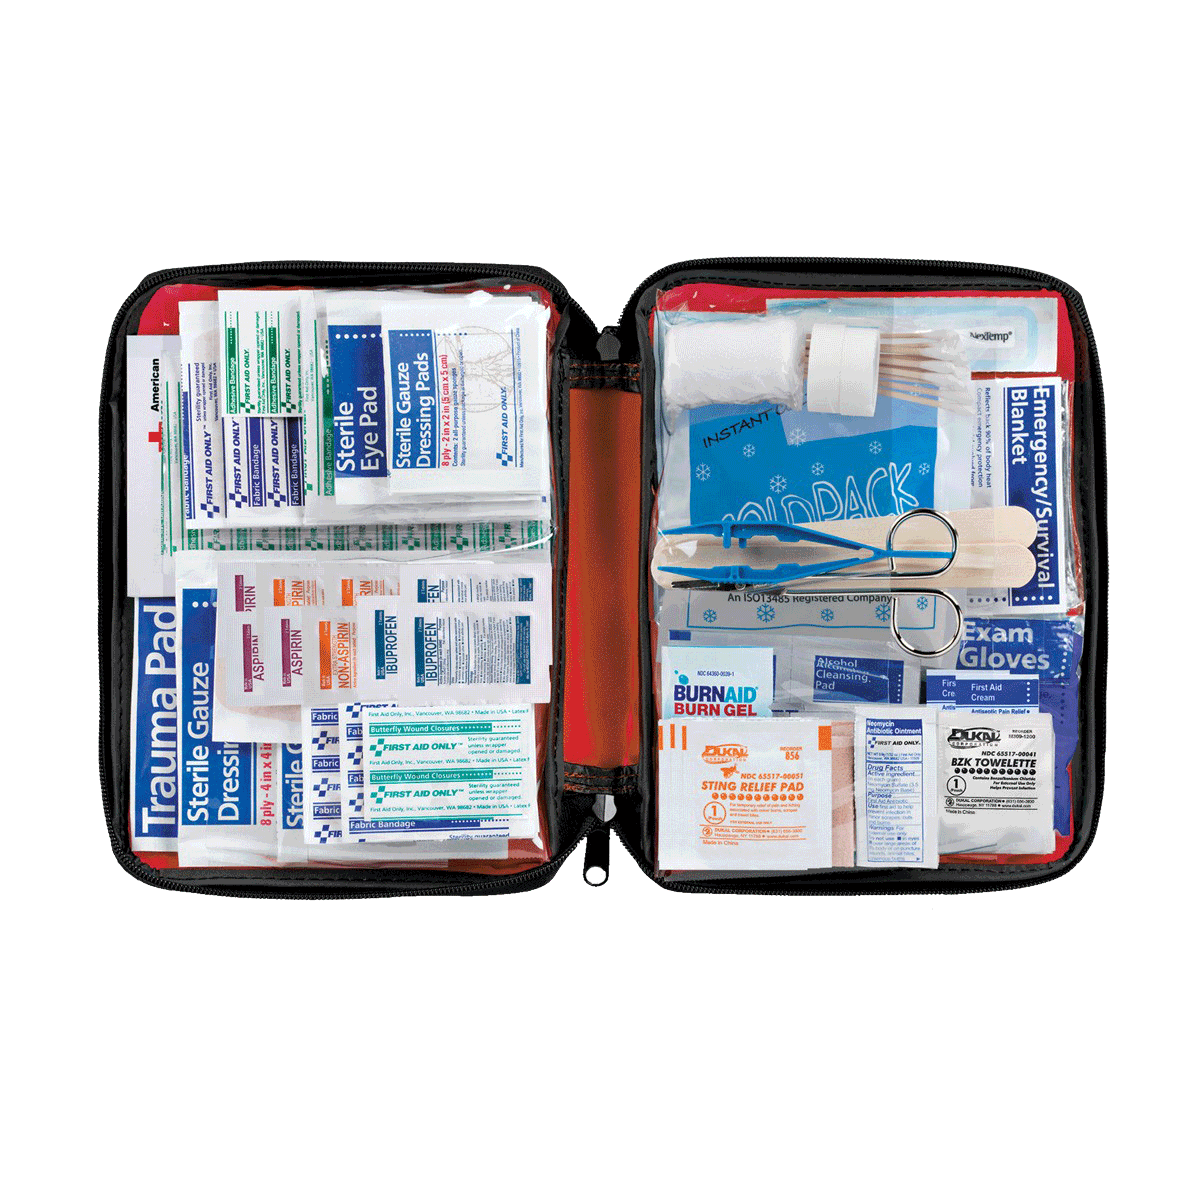 Simple First Aid Kit Store, 53% OFF | www.pegasusaerogroup.com